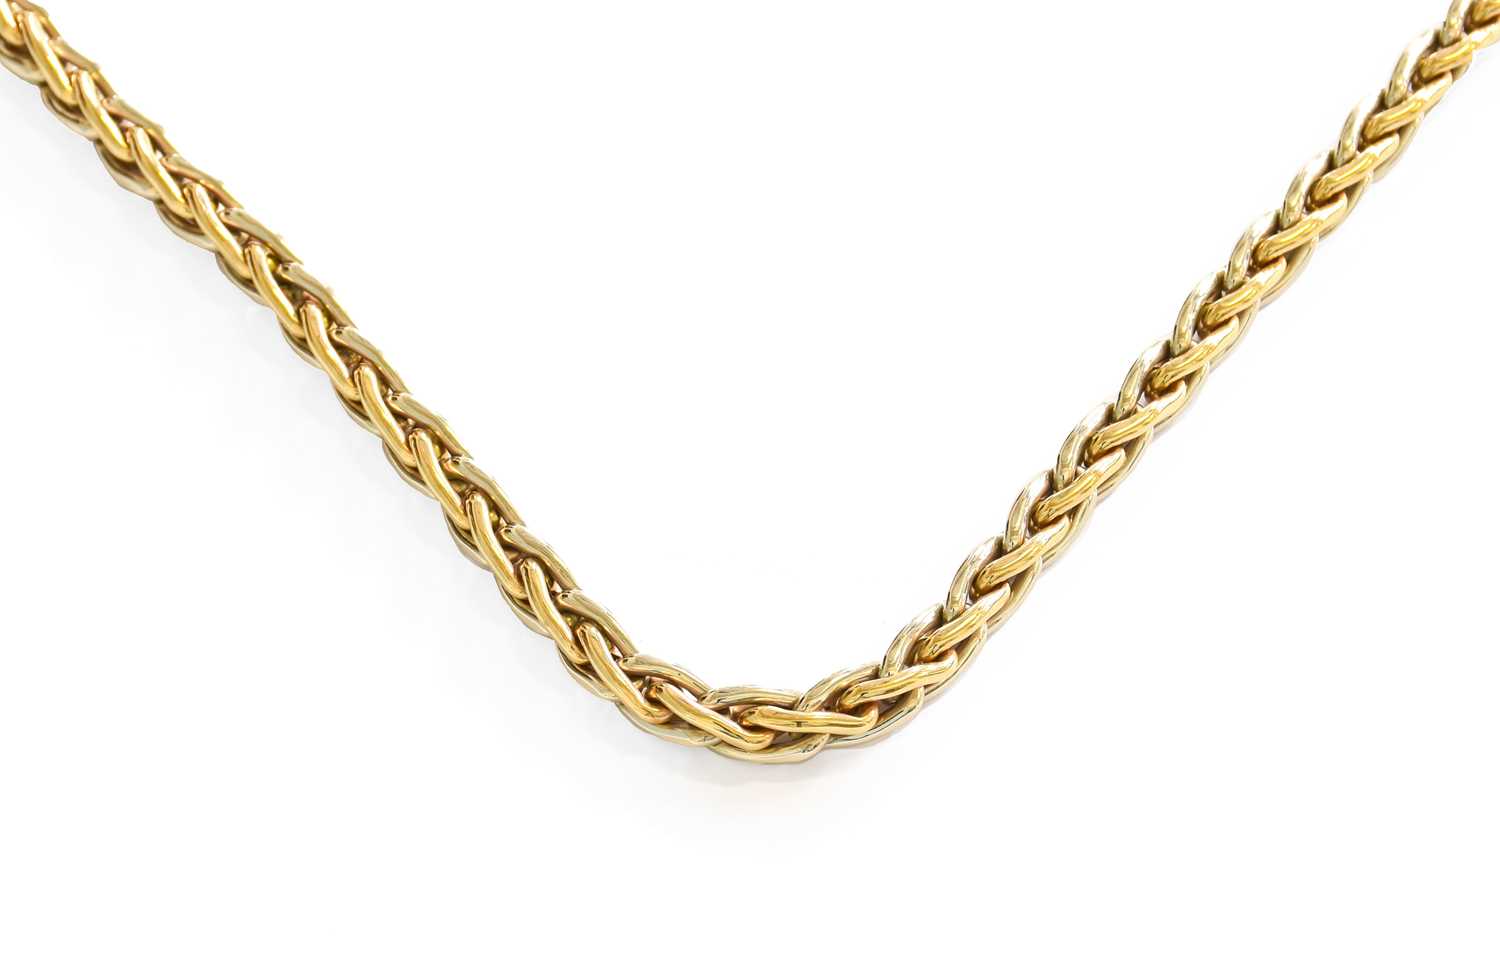 A 9 Carat Bi-Colour Gold Fancy Link Necklace, length 46cm The necklace is in good condition. It